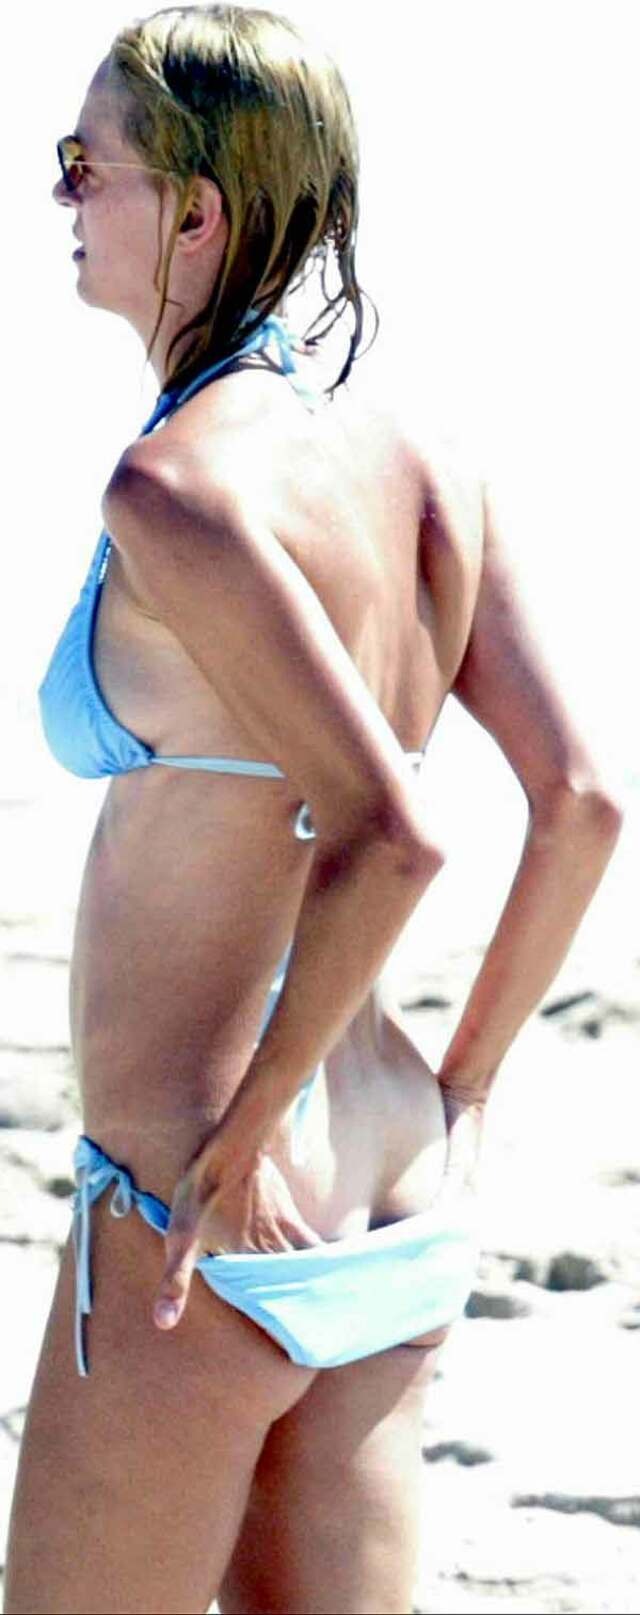 Uma Thurman, Butt Crack? HUGE Belly Button? Nice Bikini! free nude pictures